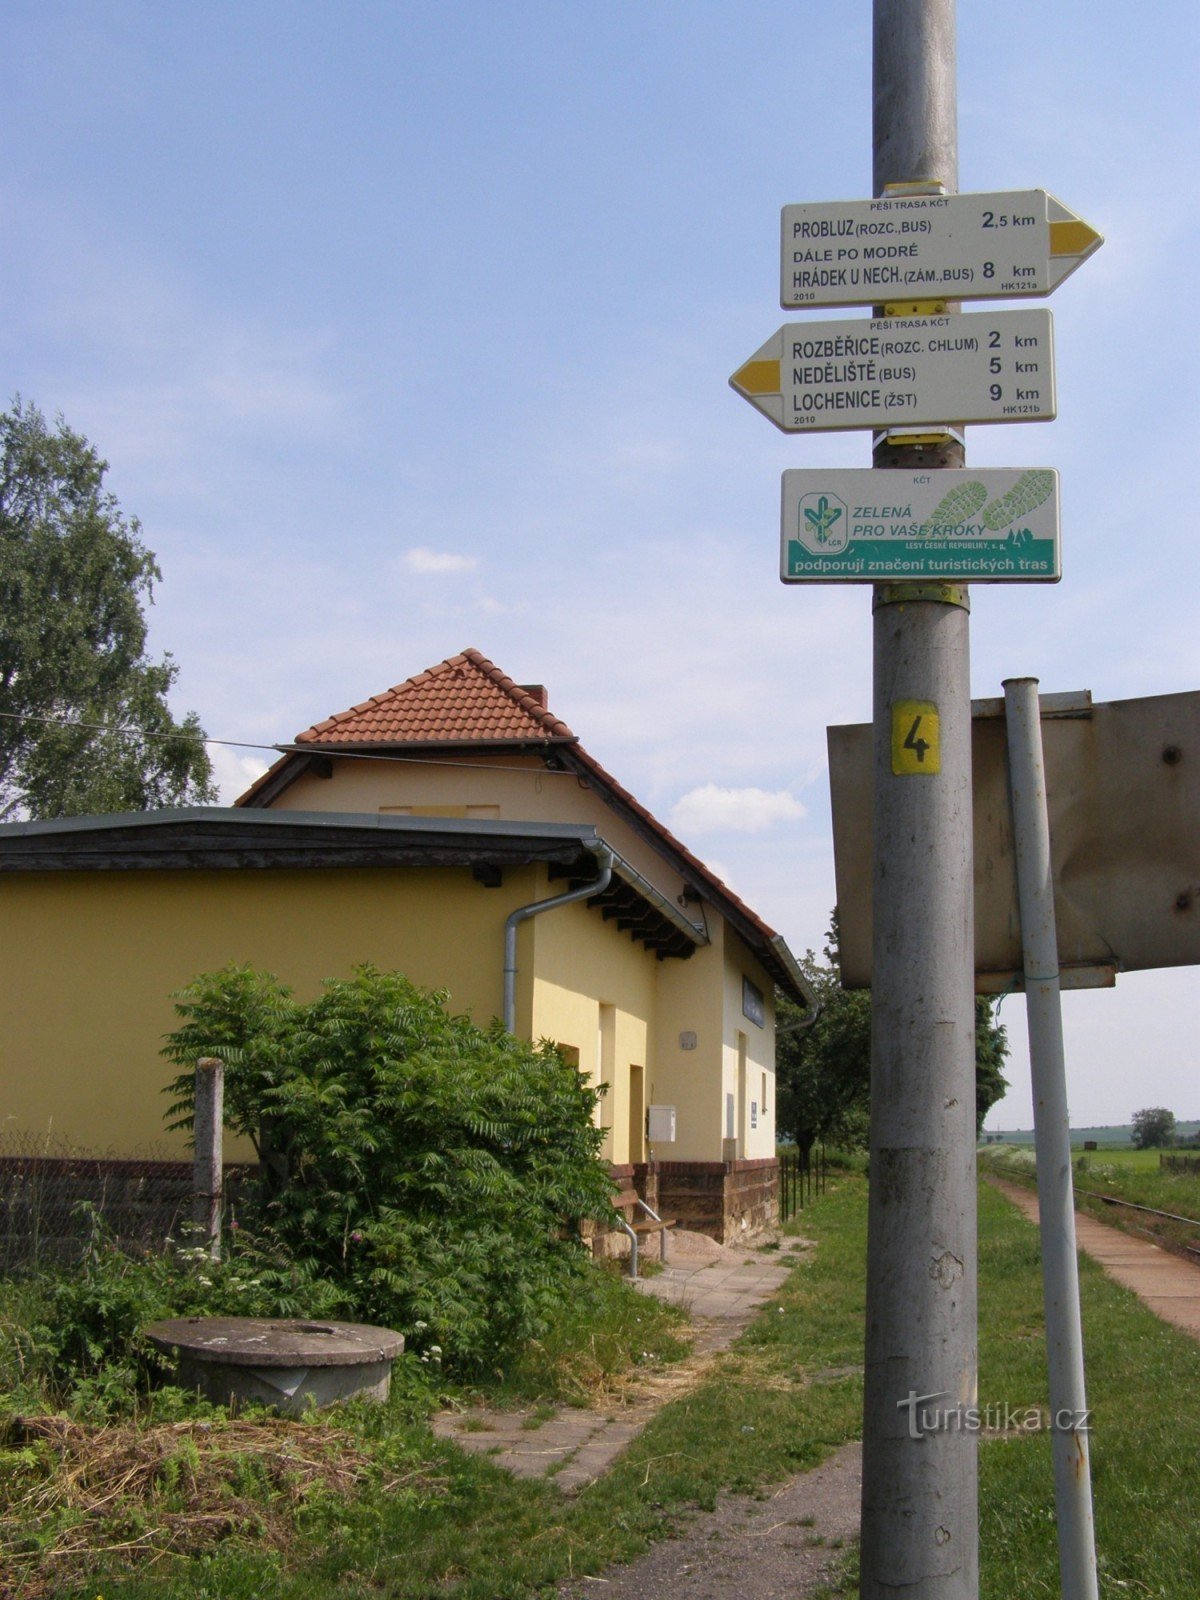 toeristisch kruispunt Dlouhé Dvory - spoorweg